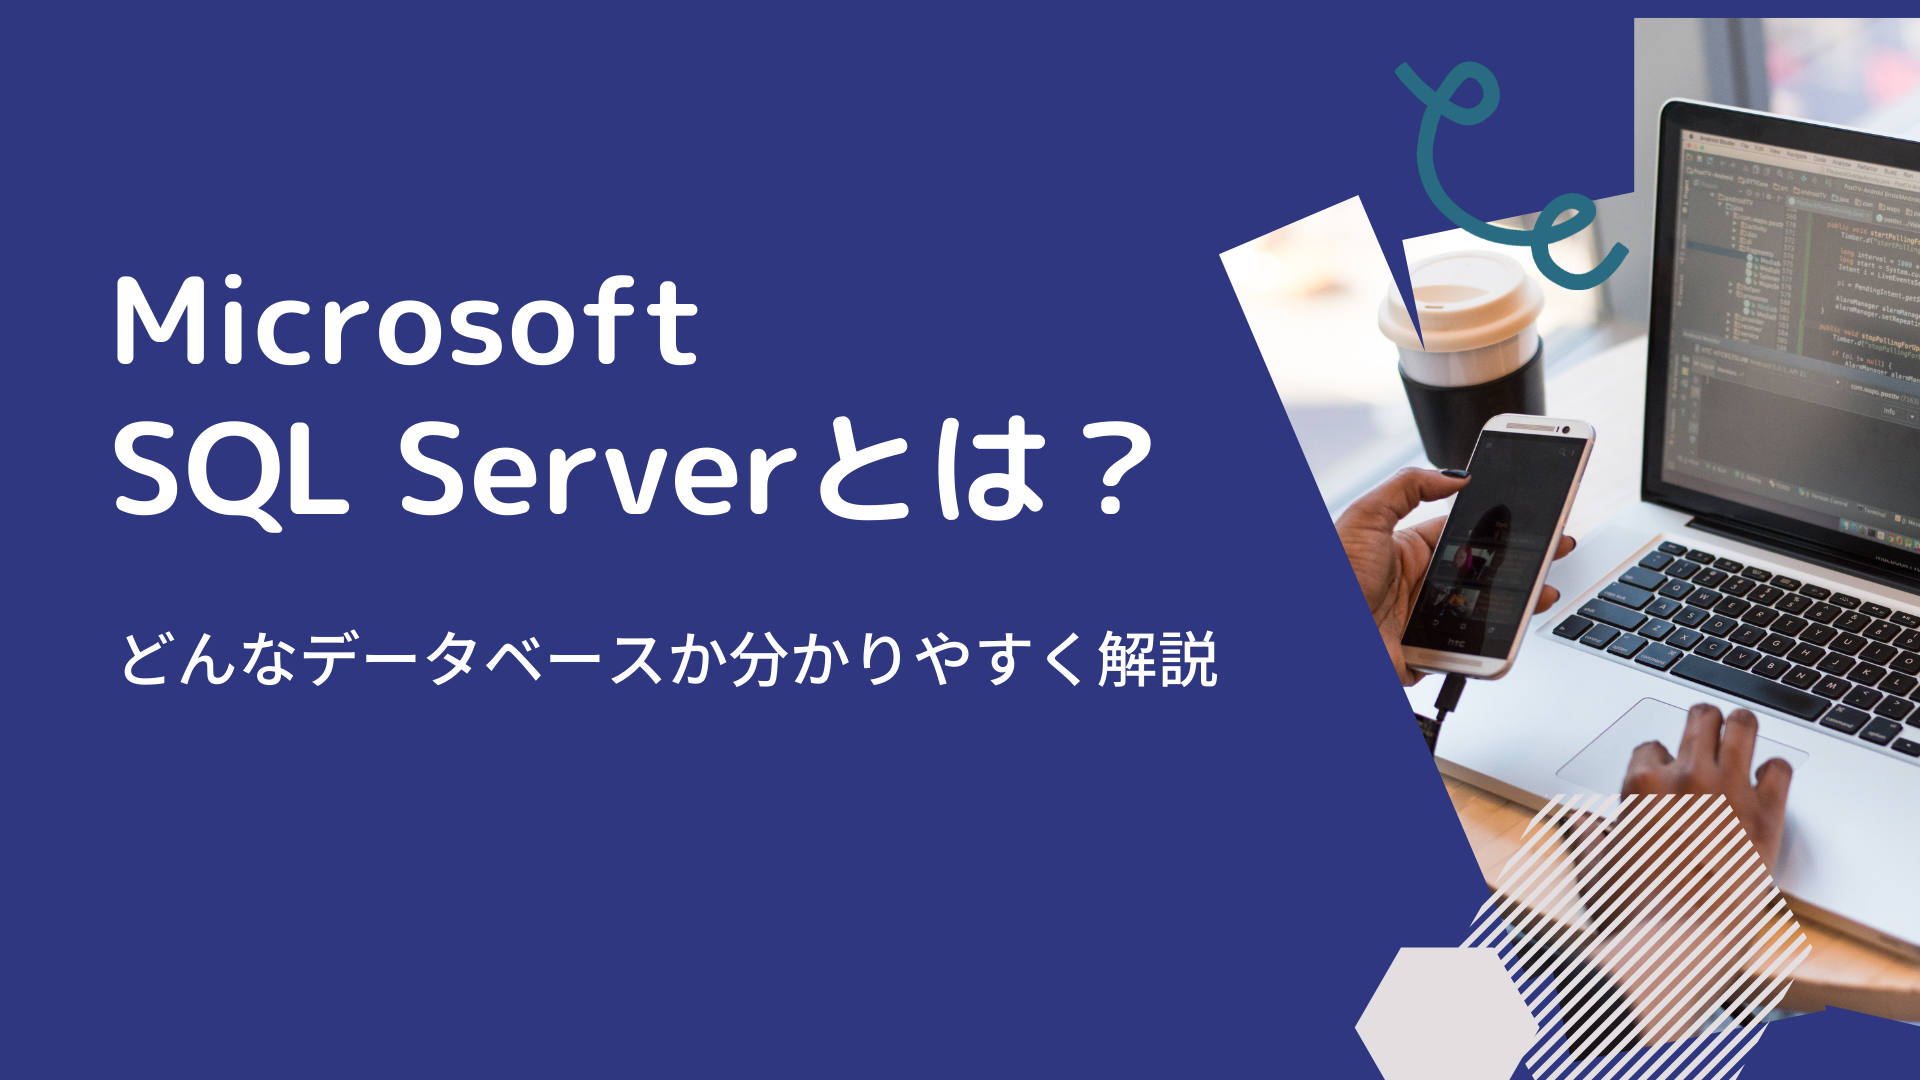 Microsoft SQL Serverとは？どんなデータベースか分かりやすく解説